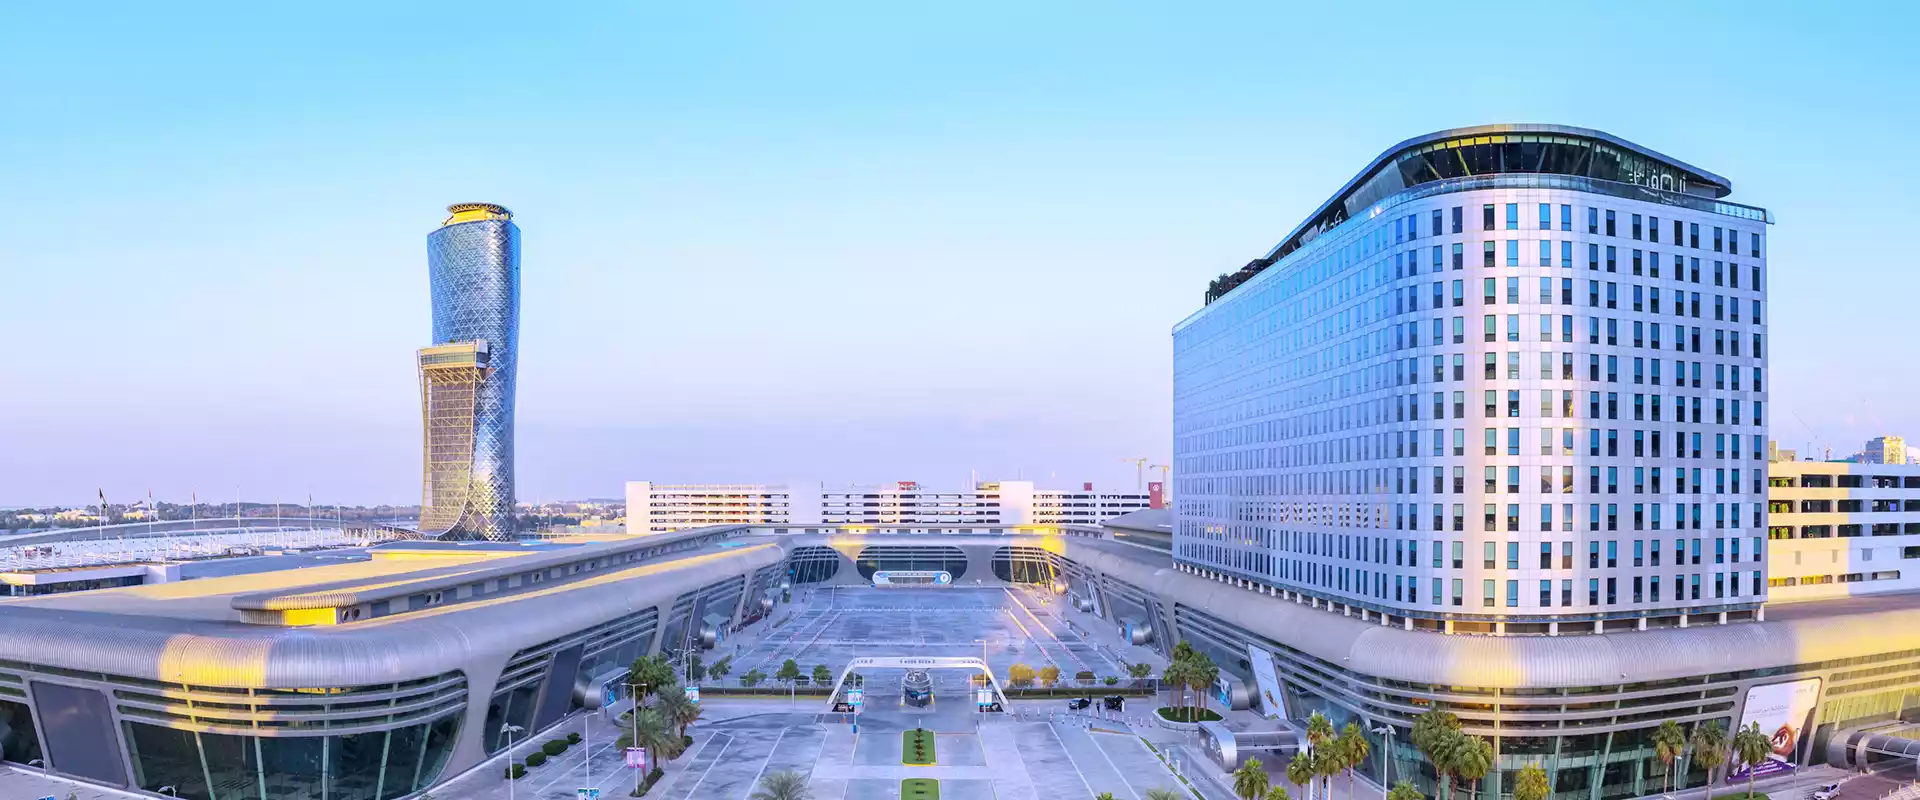 ADNEC – Abu Dhabi National Exhibition Centre, host of many prestigious Abu Dhabi Events